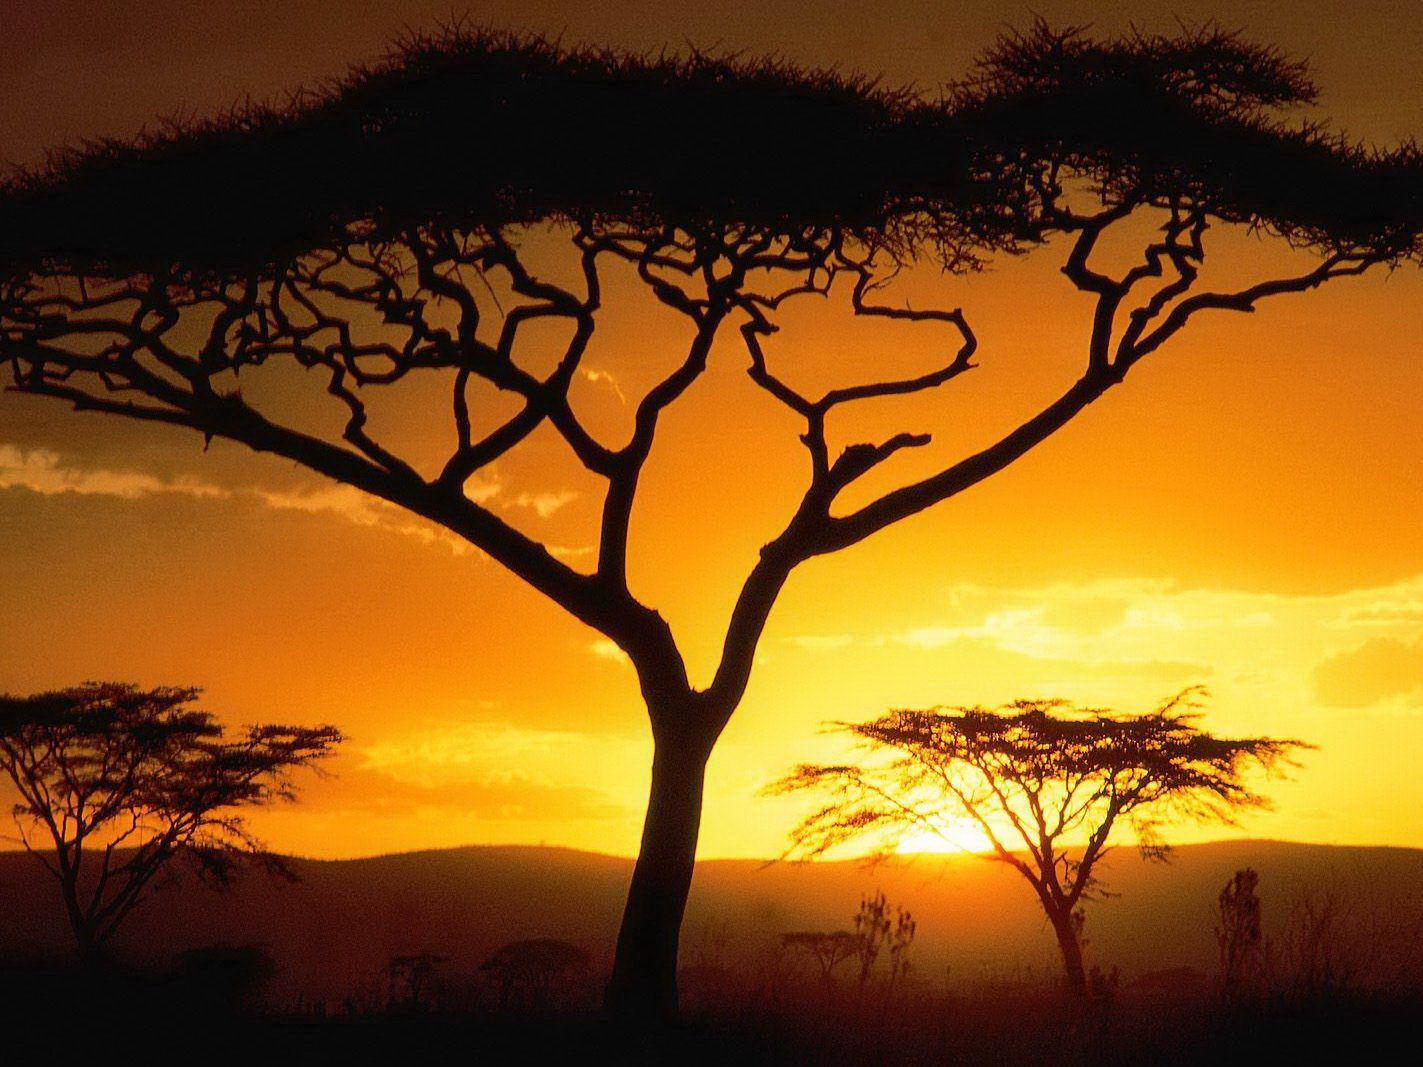 African Landscape Sunset - wallpaper.